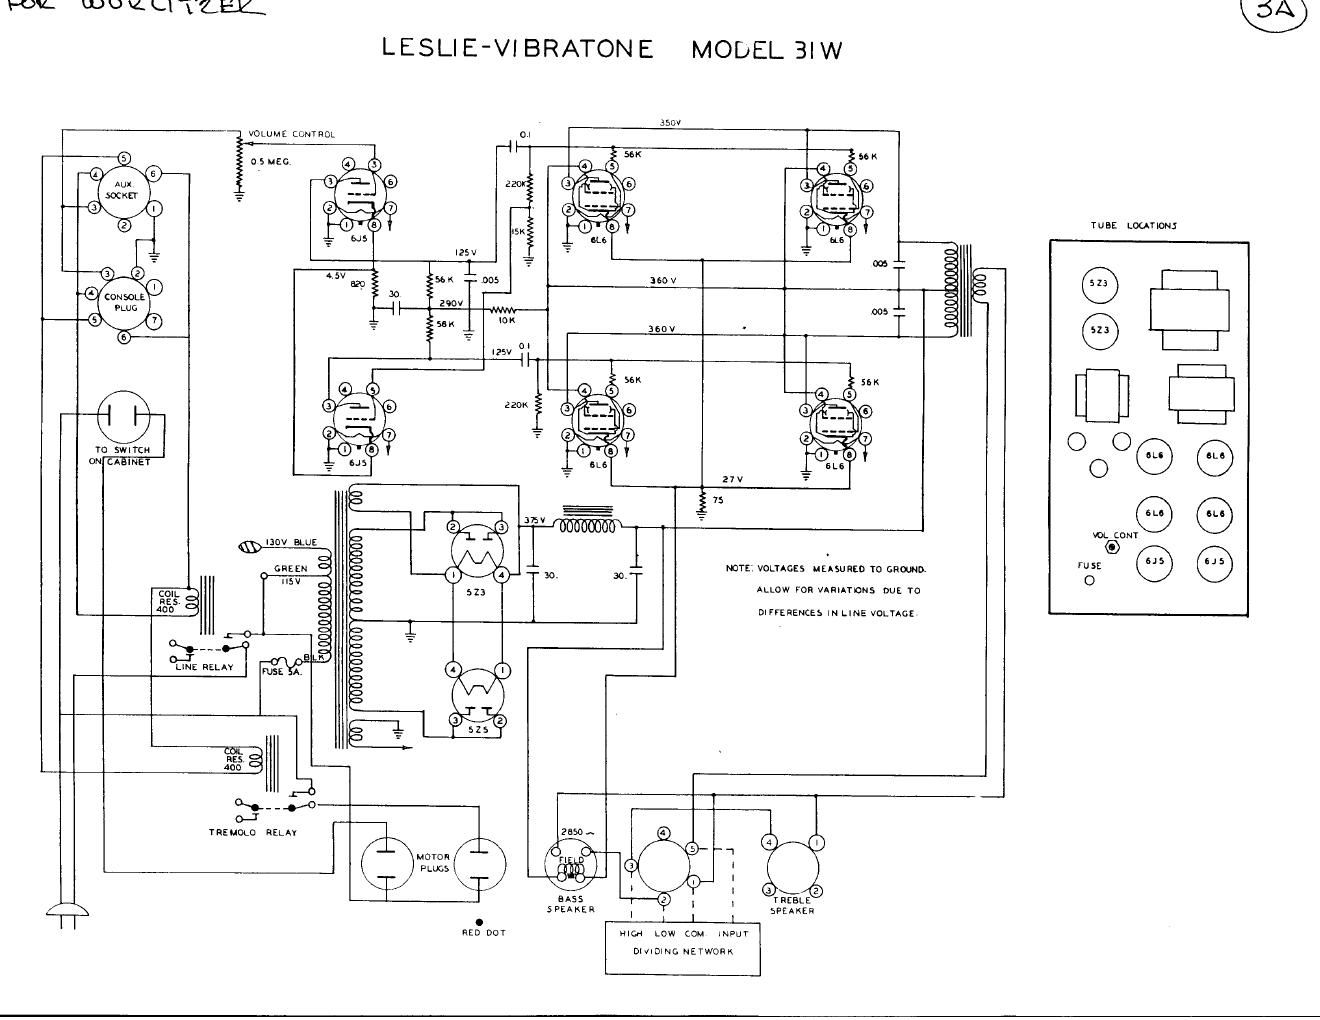 leslie vibratone 31w schematic